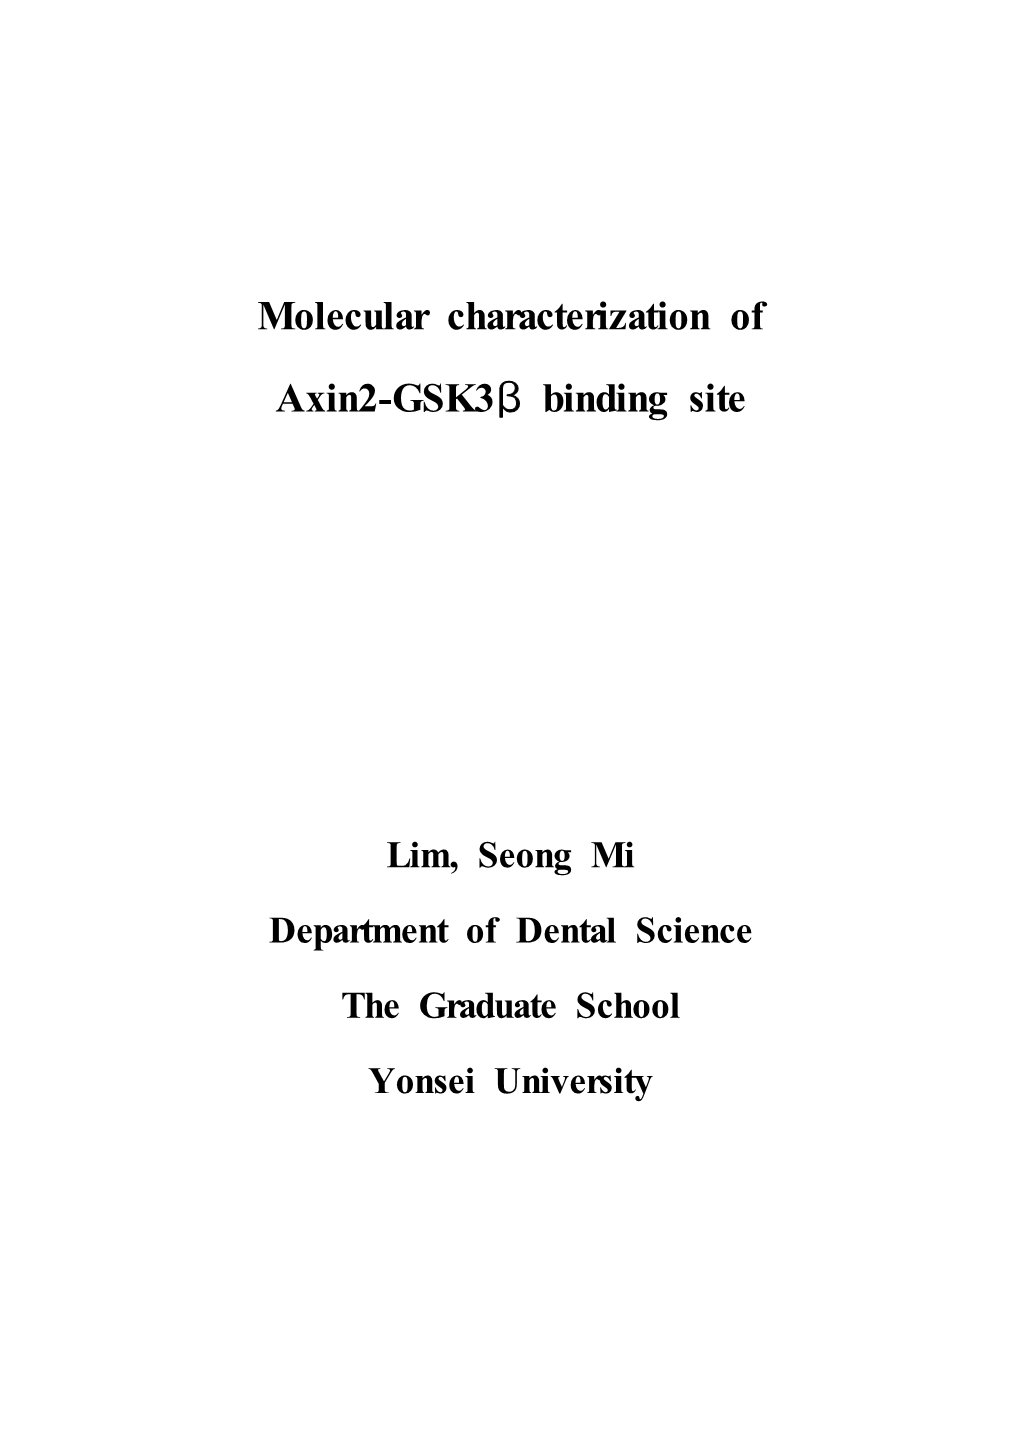 Molecular Characterization of Axin2-Gsk3β Binding Site